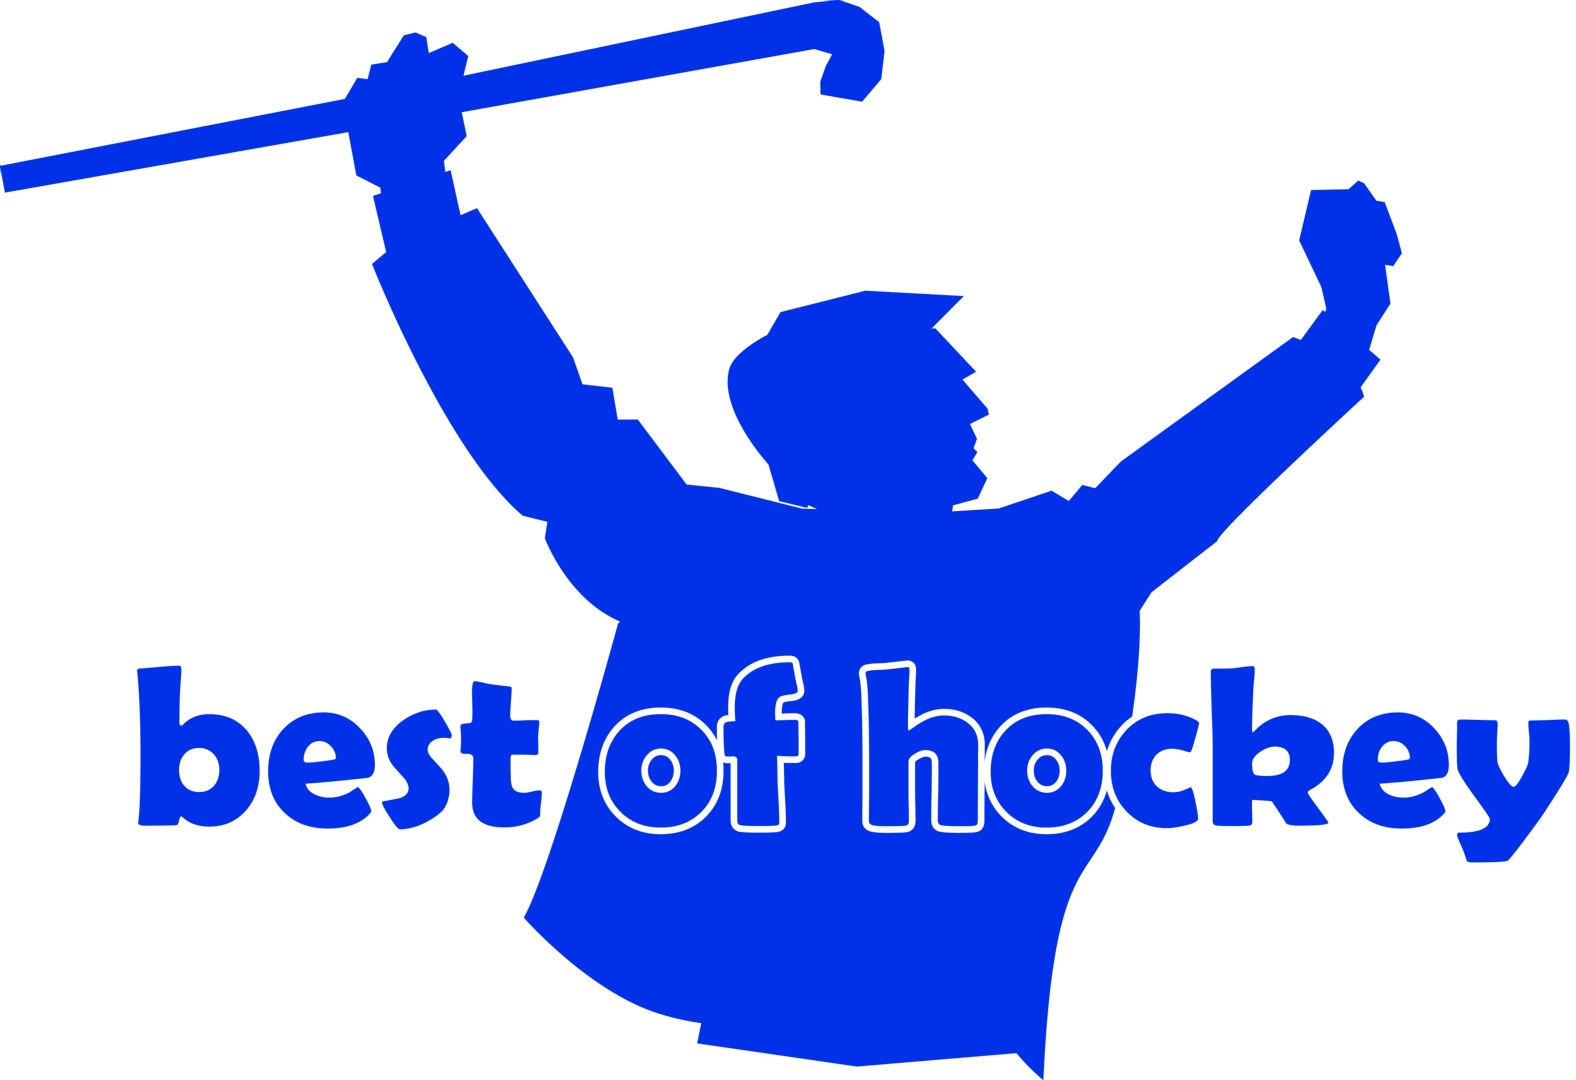 Best of Hockey